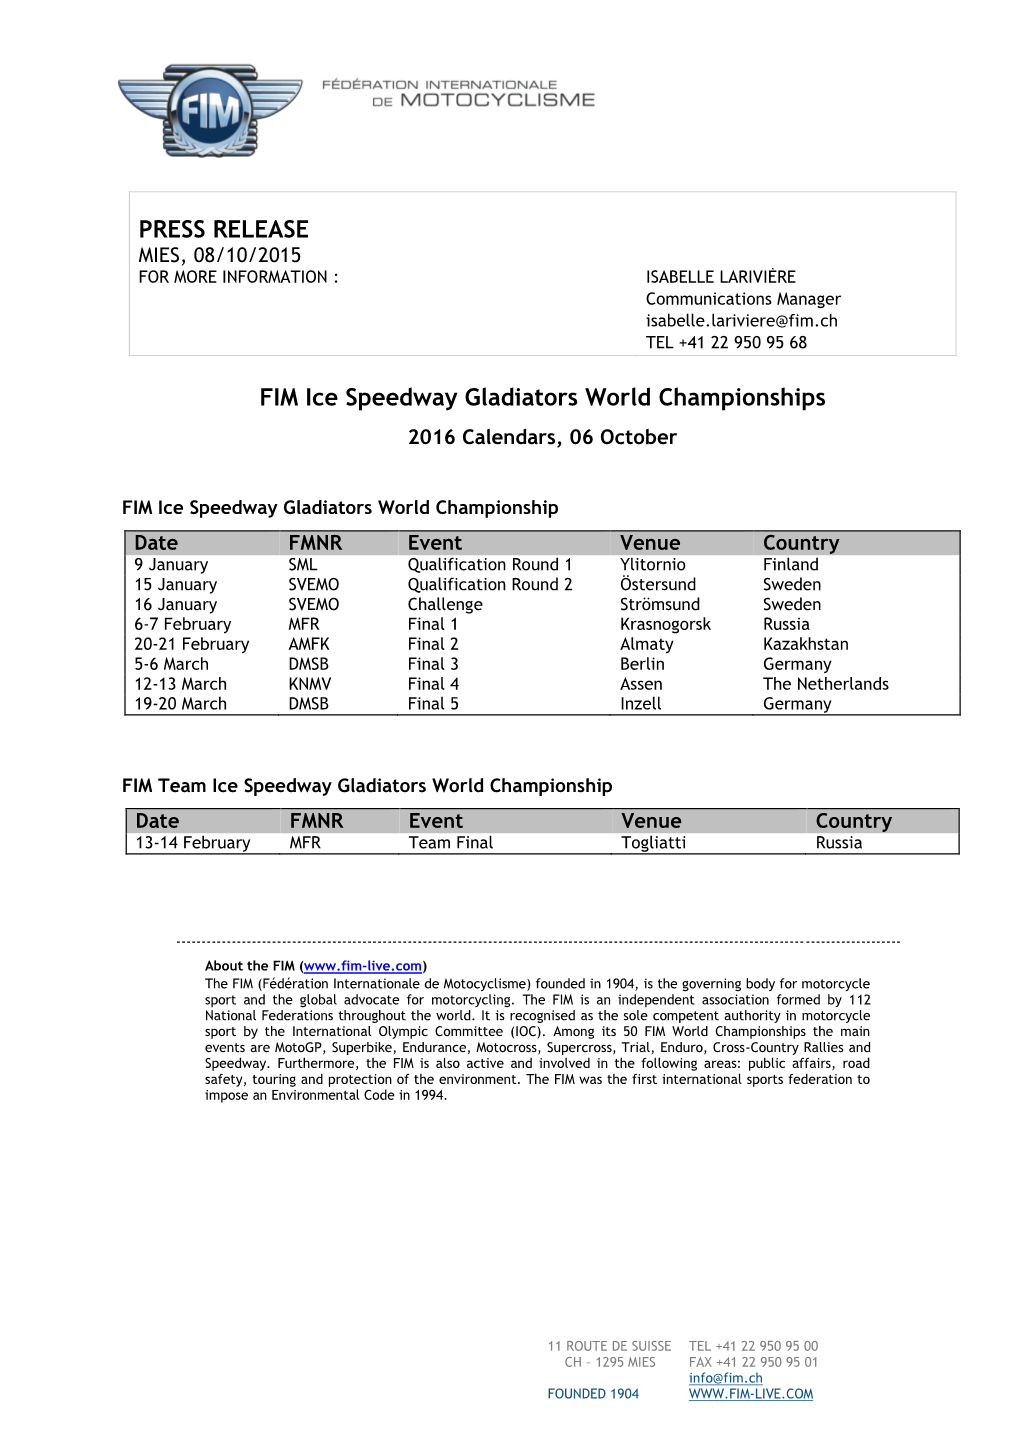 PRESS RELEASE FIM Ice Speedway Gladiators World Championships